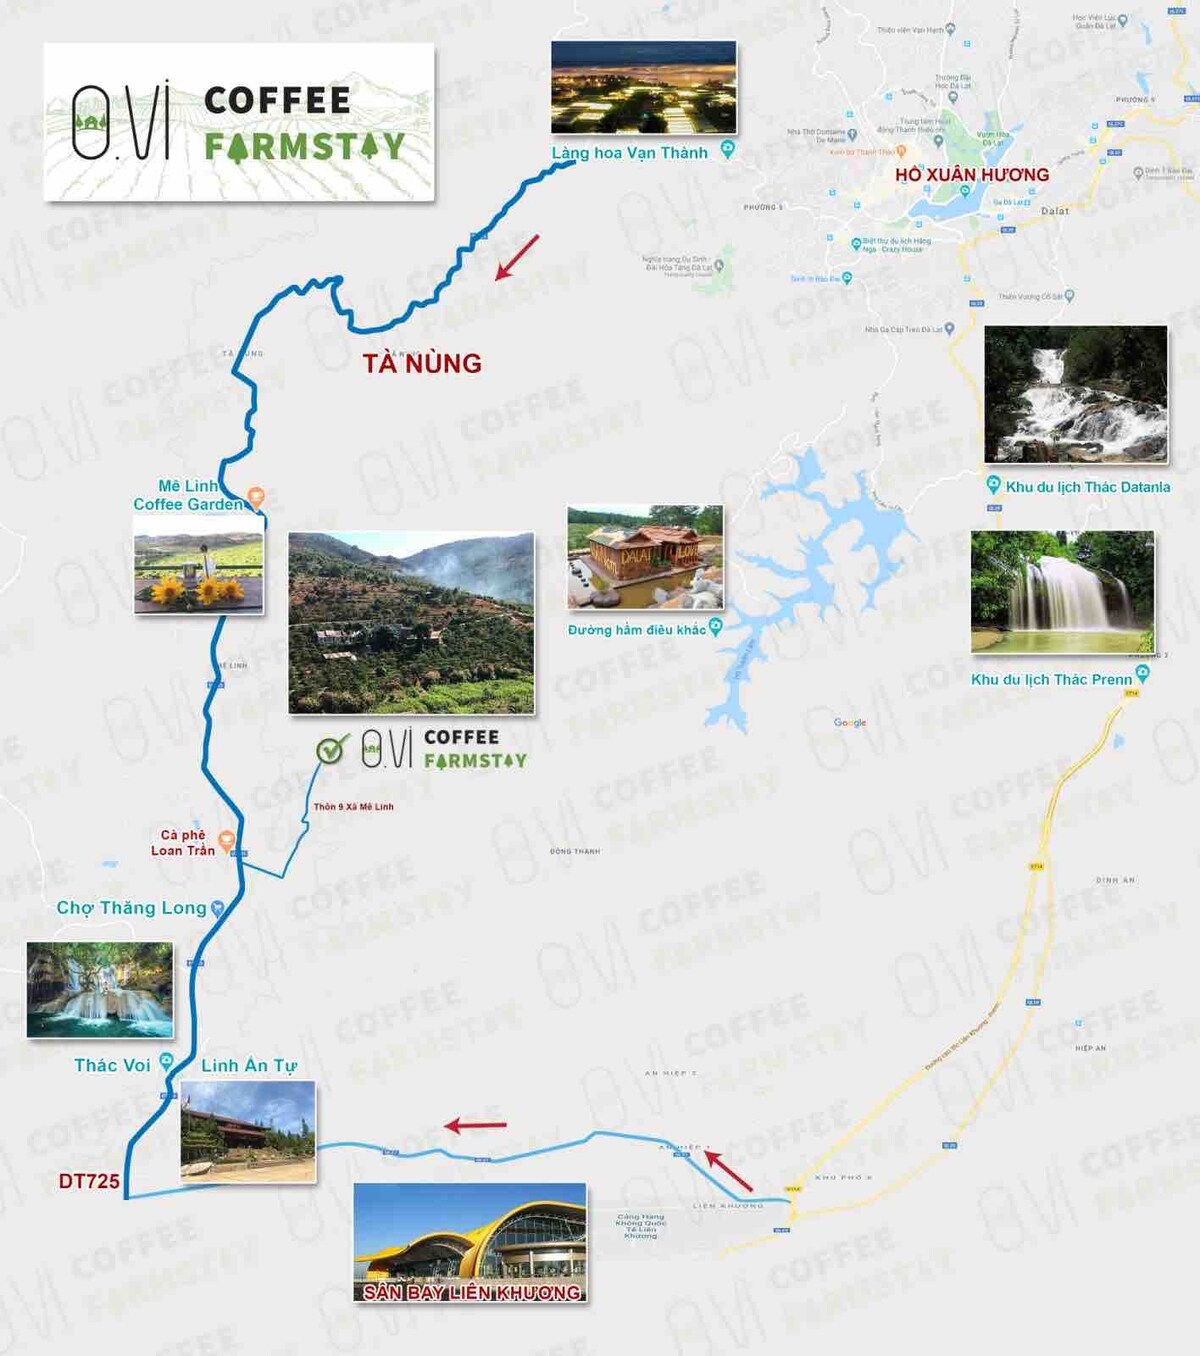 OVi Coffee FarmStay (O.Vi)